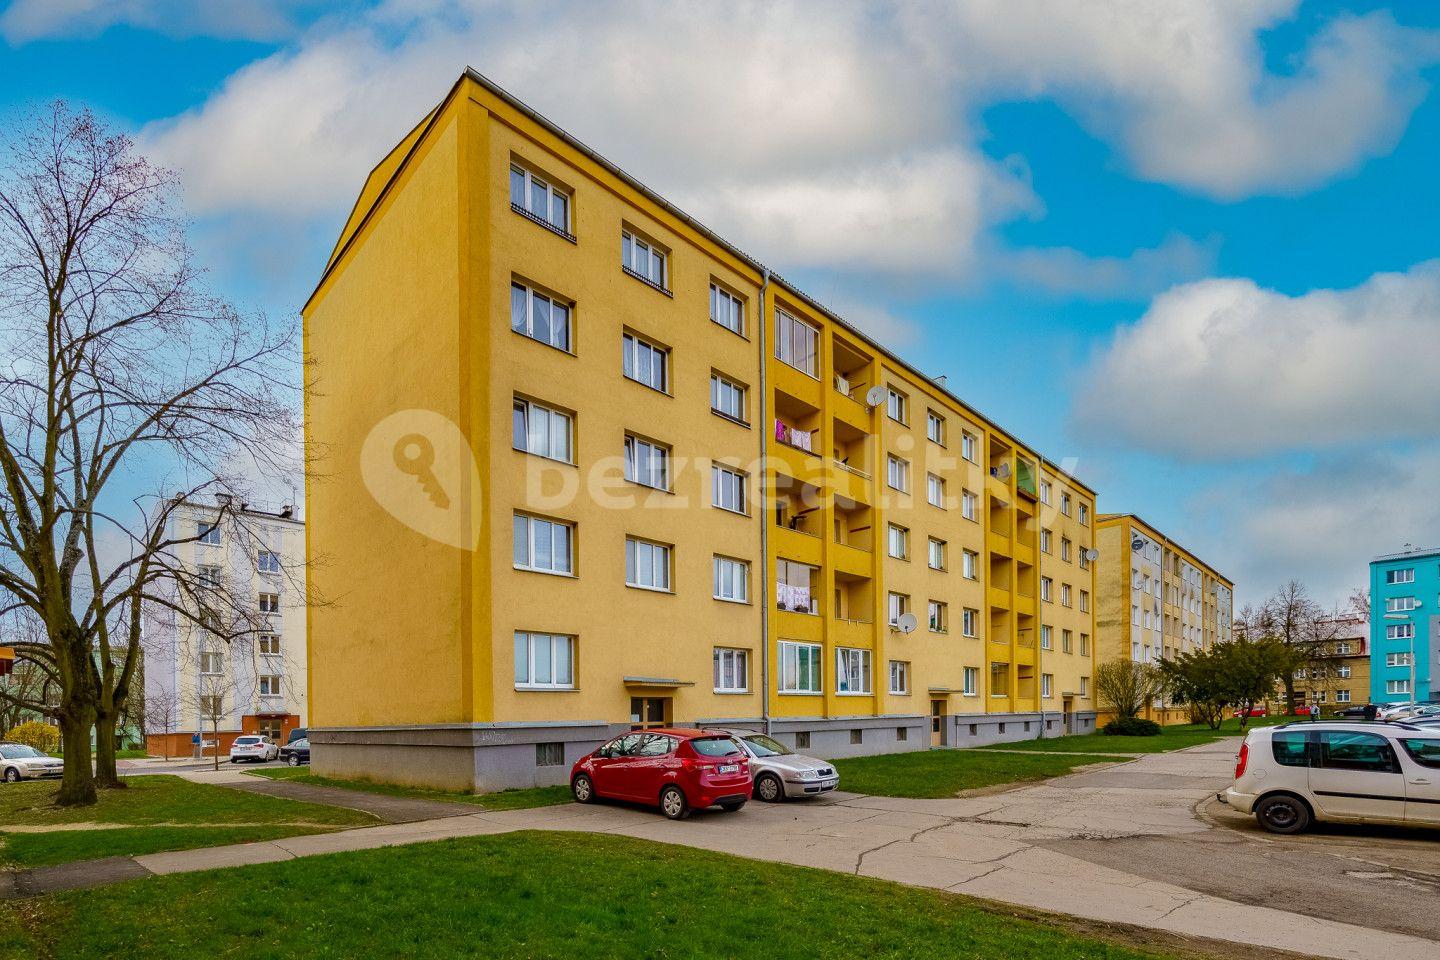 3 bedroom flat for sale, 69 m², Kosmonautů, Cheb, Karlovarský Region